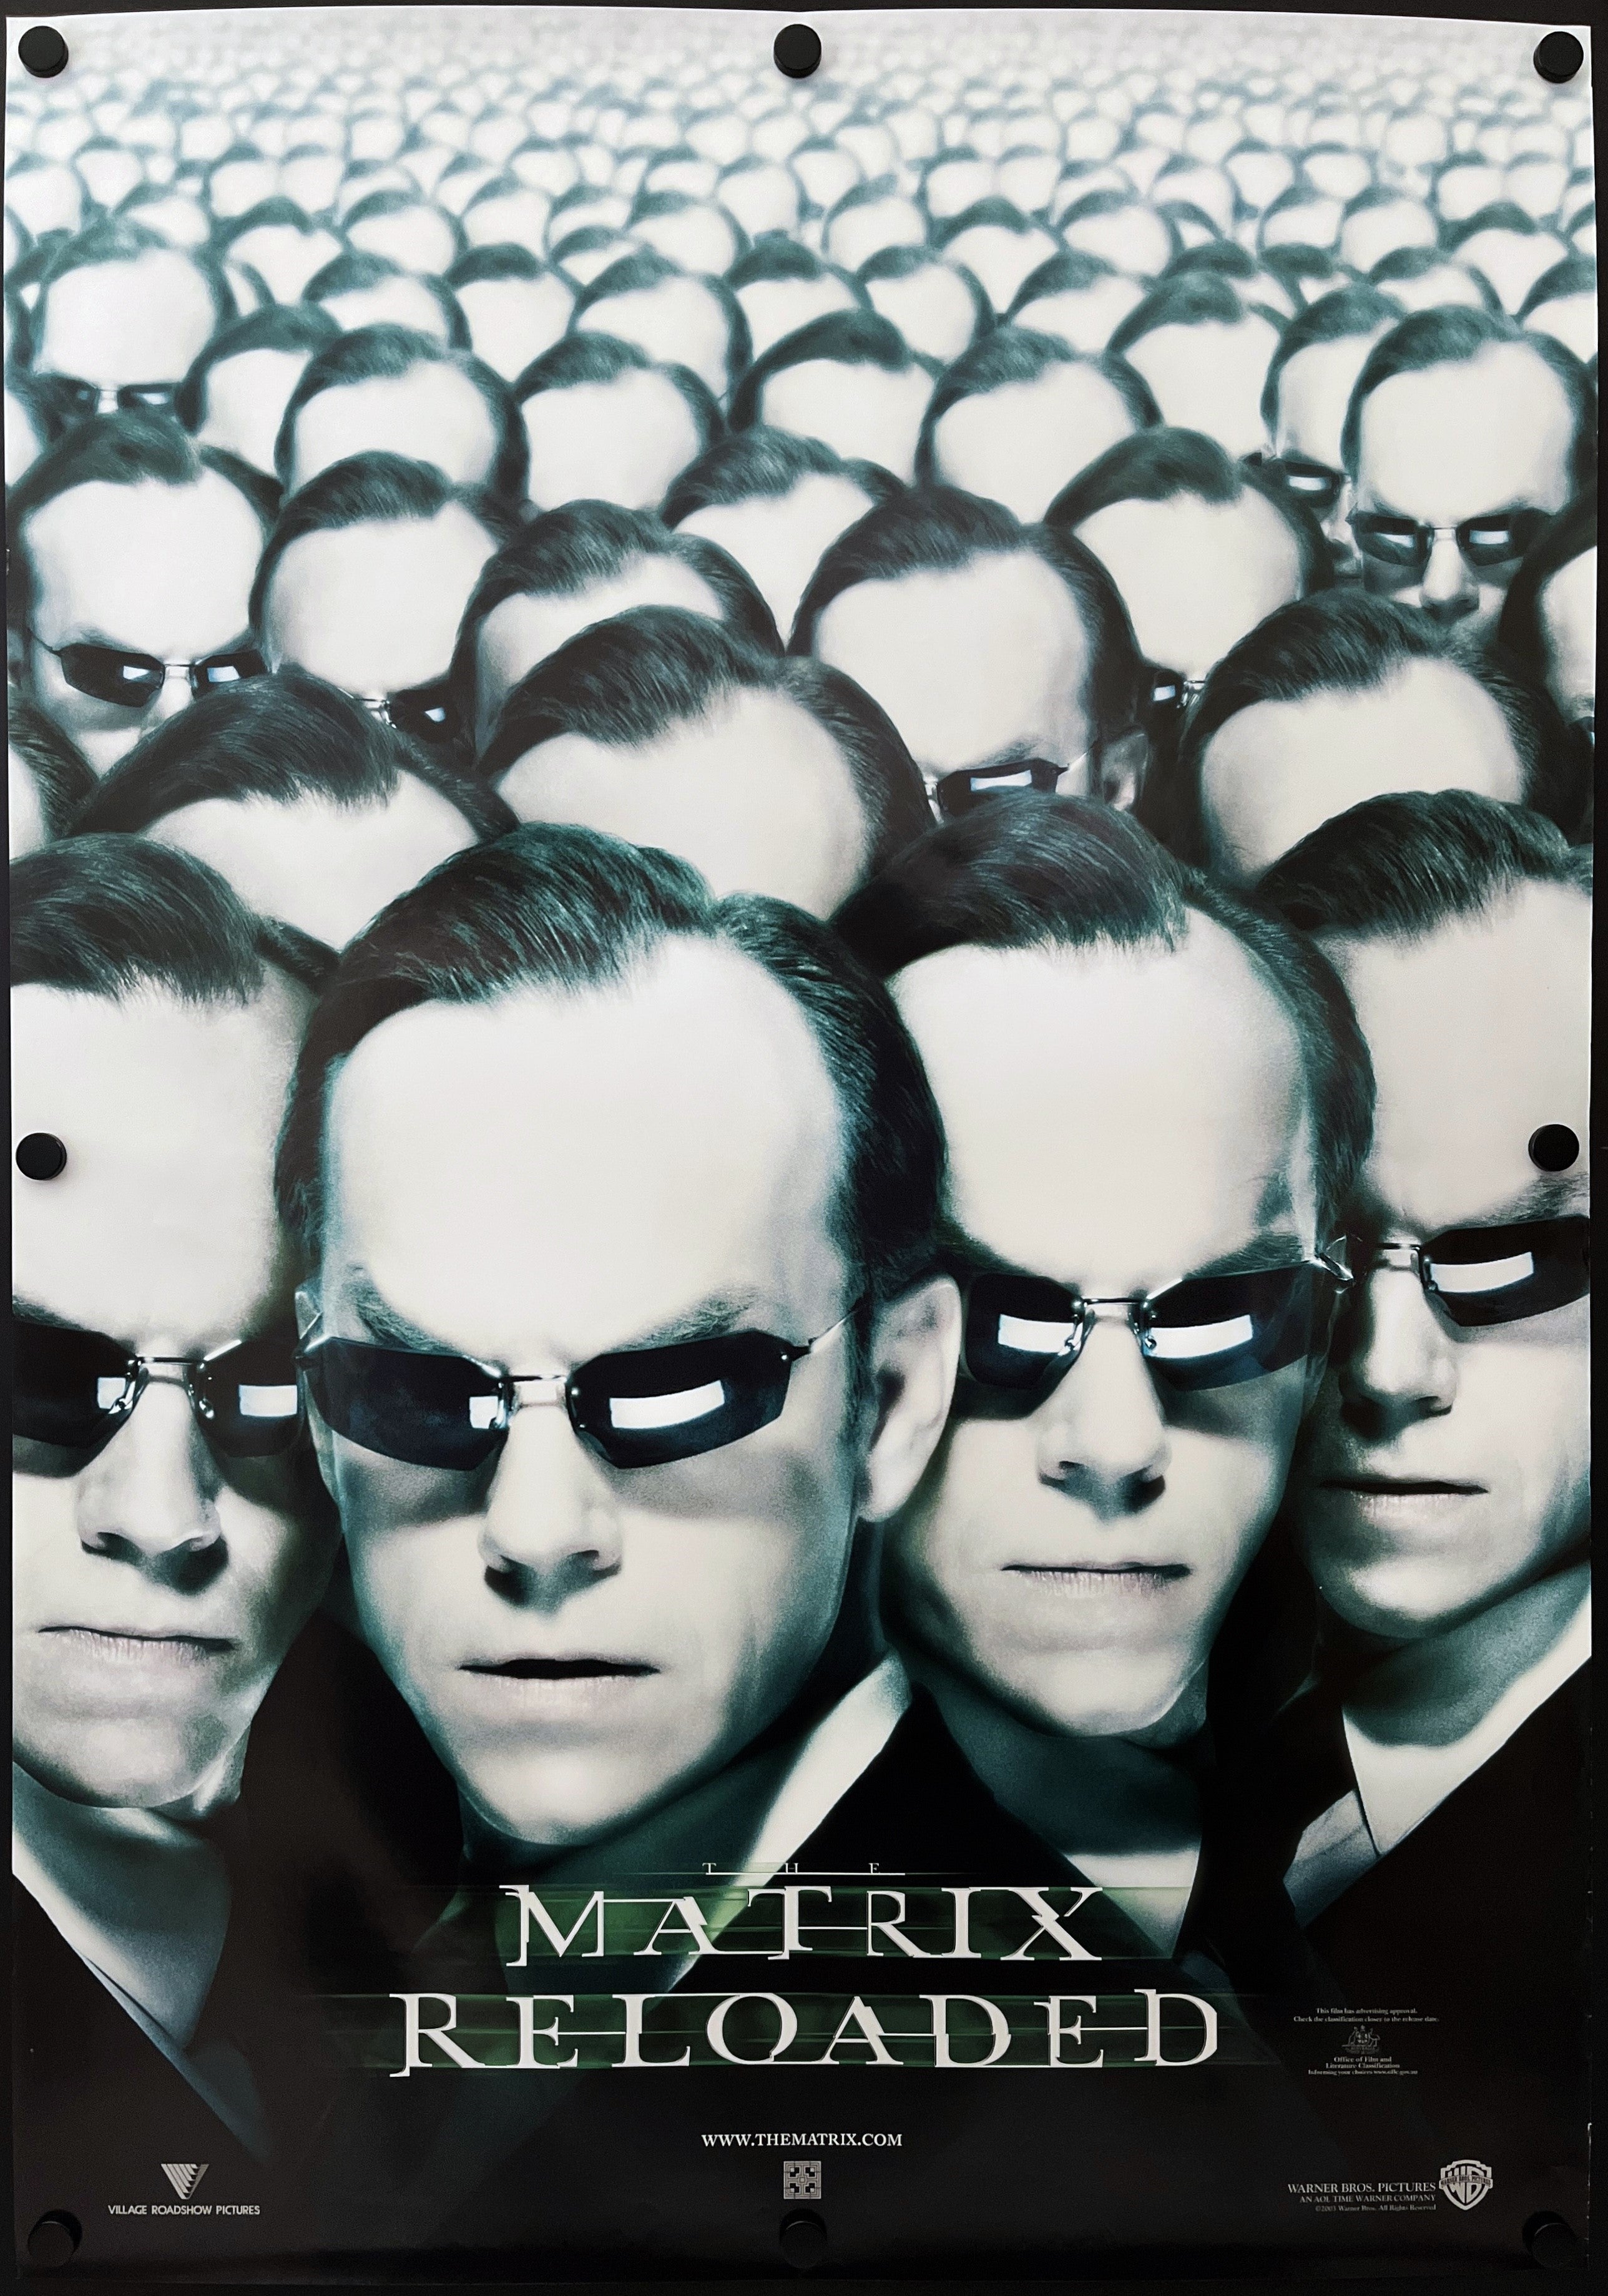 THE MATRIX RELOADED (2003)